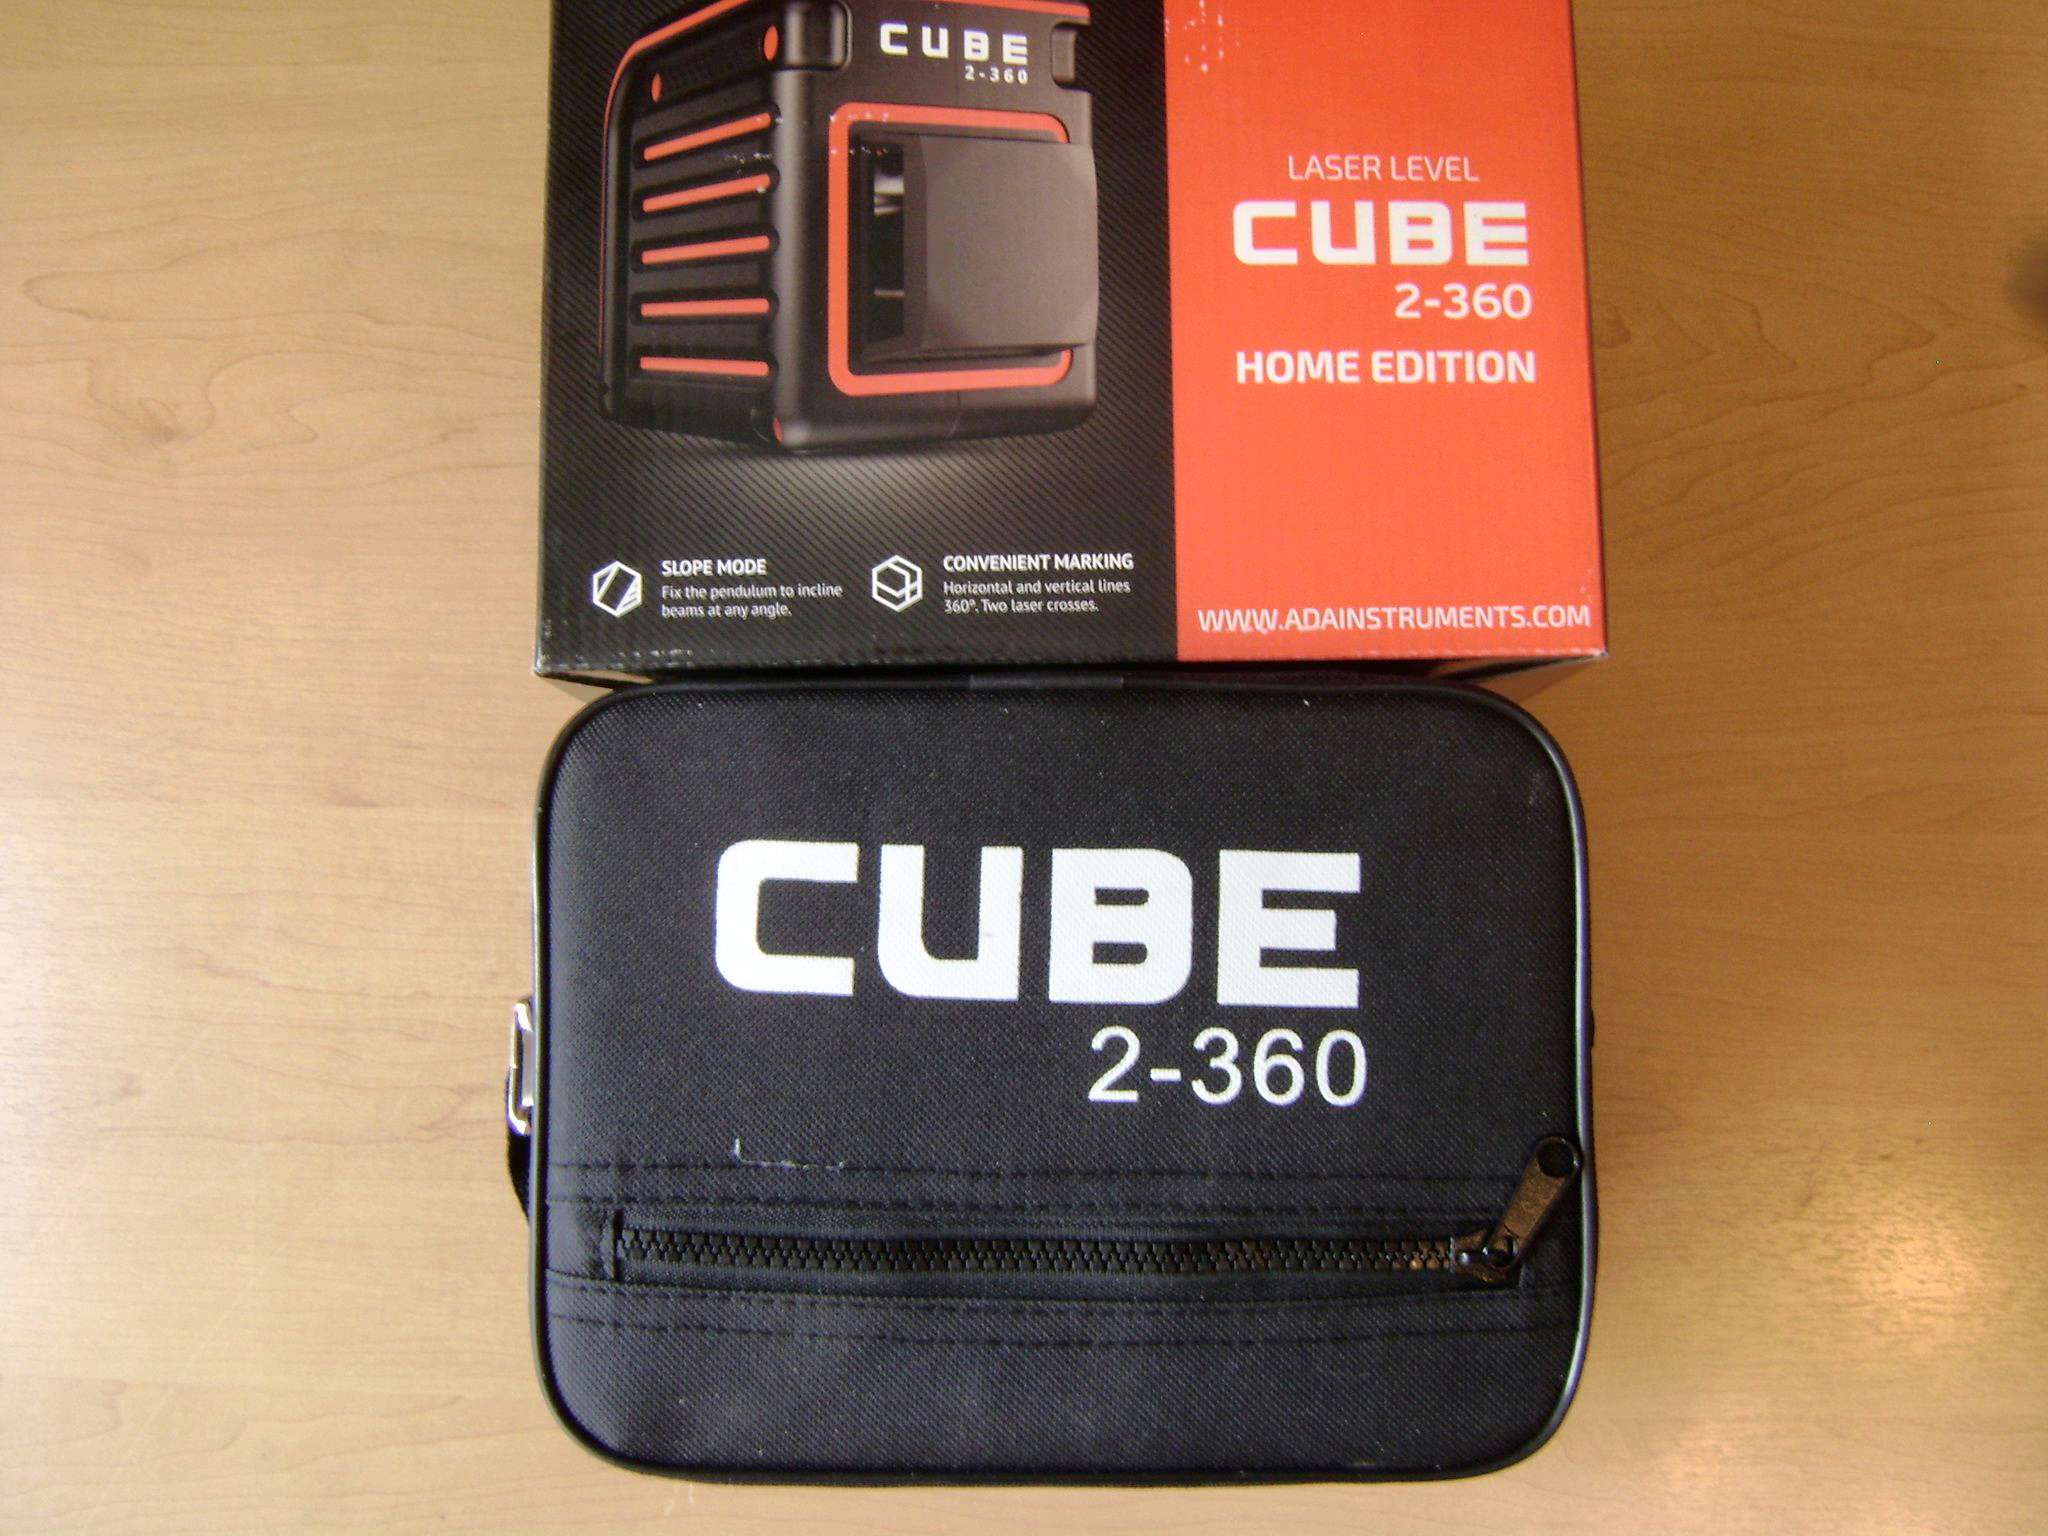 Ada cube 2 360. Лазерный уровень ada Cube Home Edition. Ada Cube 3-360 Home Edition. Лазерный уровень ada gube анлог 3-360 (0,46 кг,100х100х85 мм).